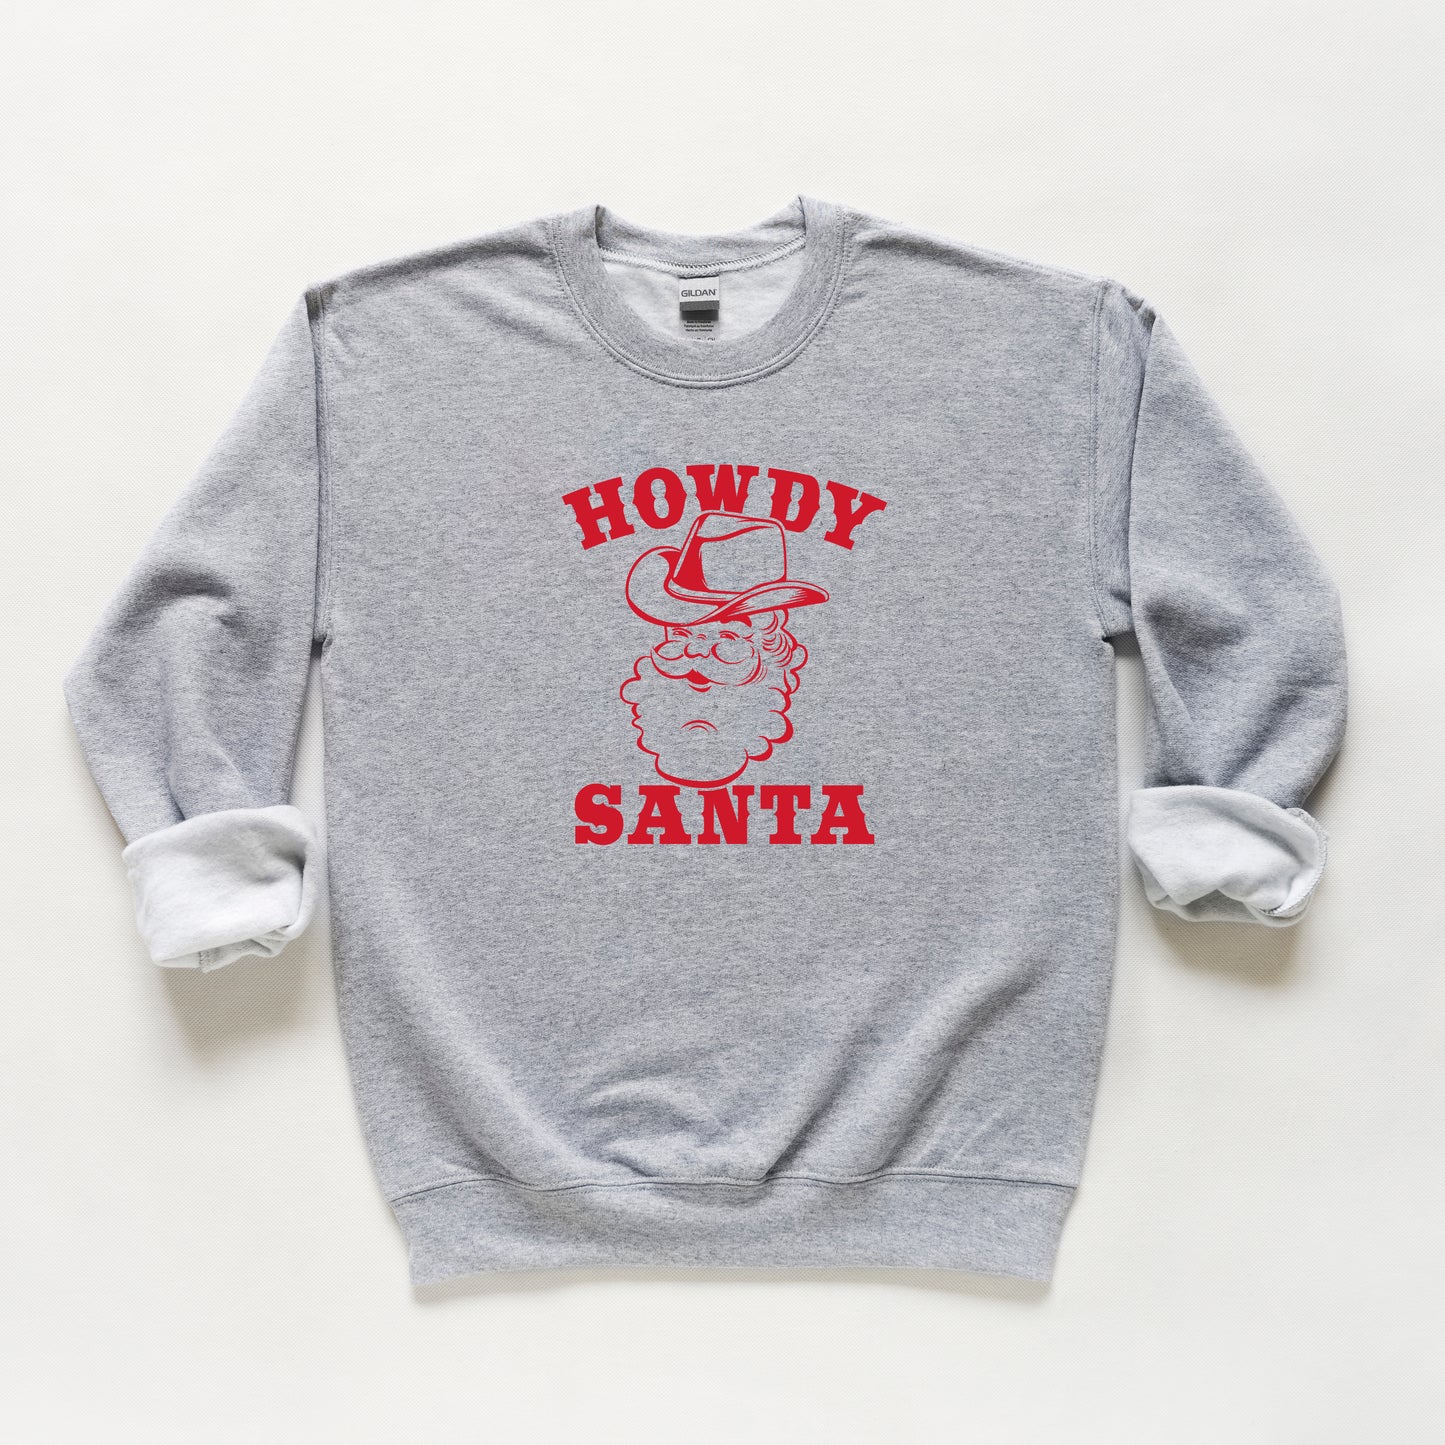 Howdy Santa Claus | Youth Sweatshirt